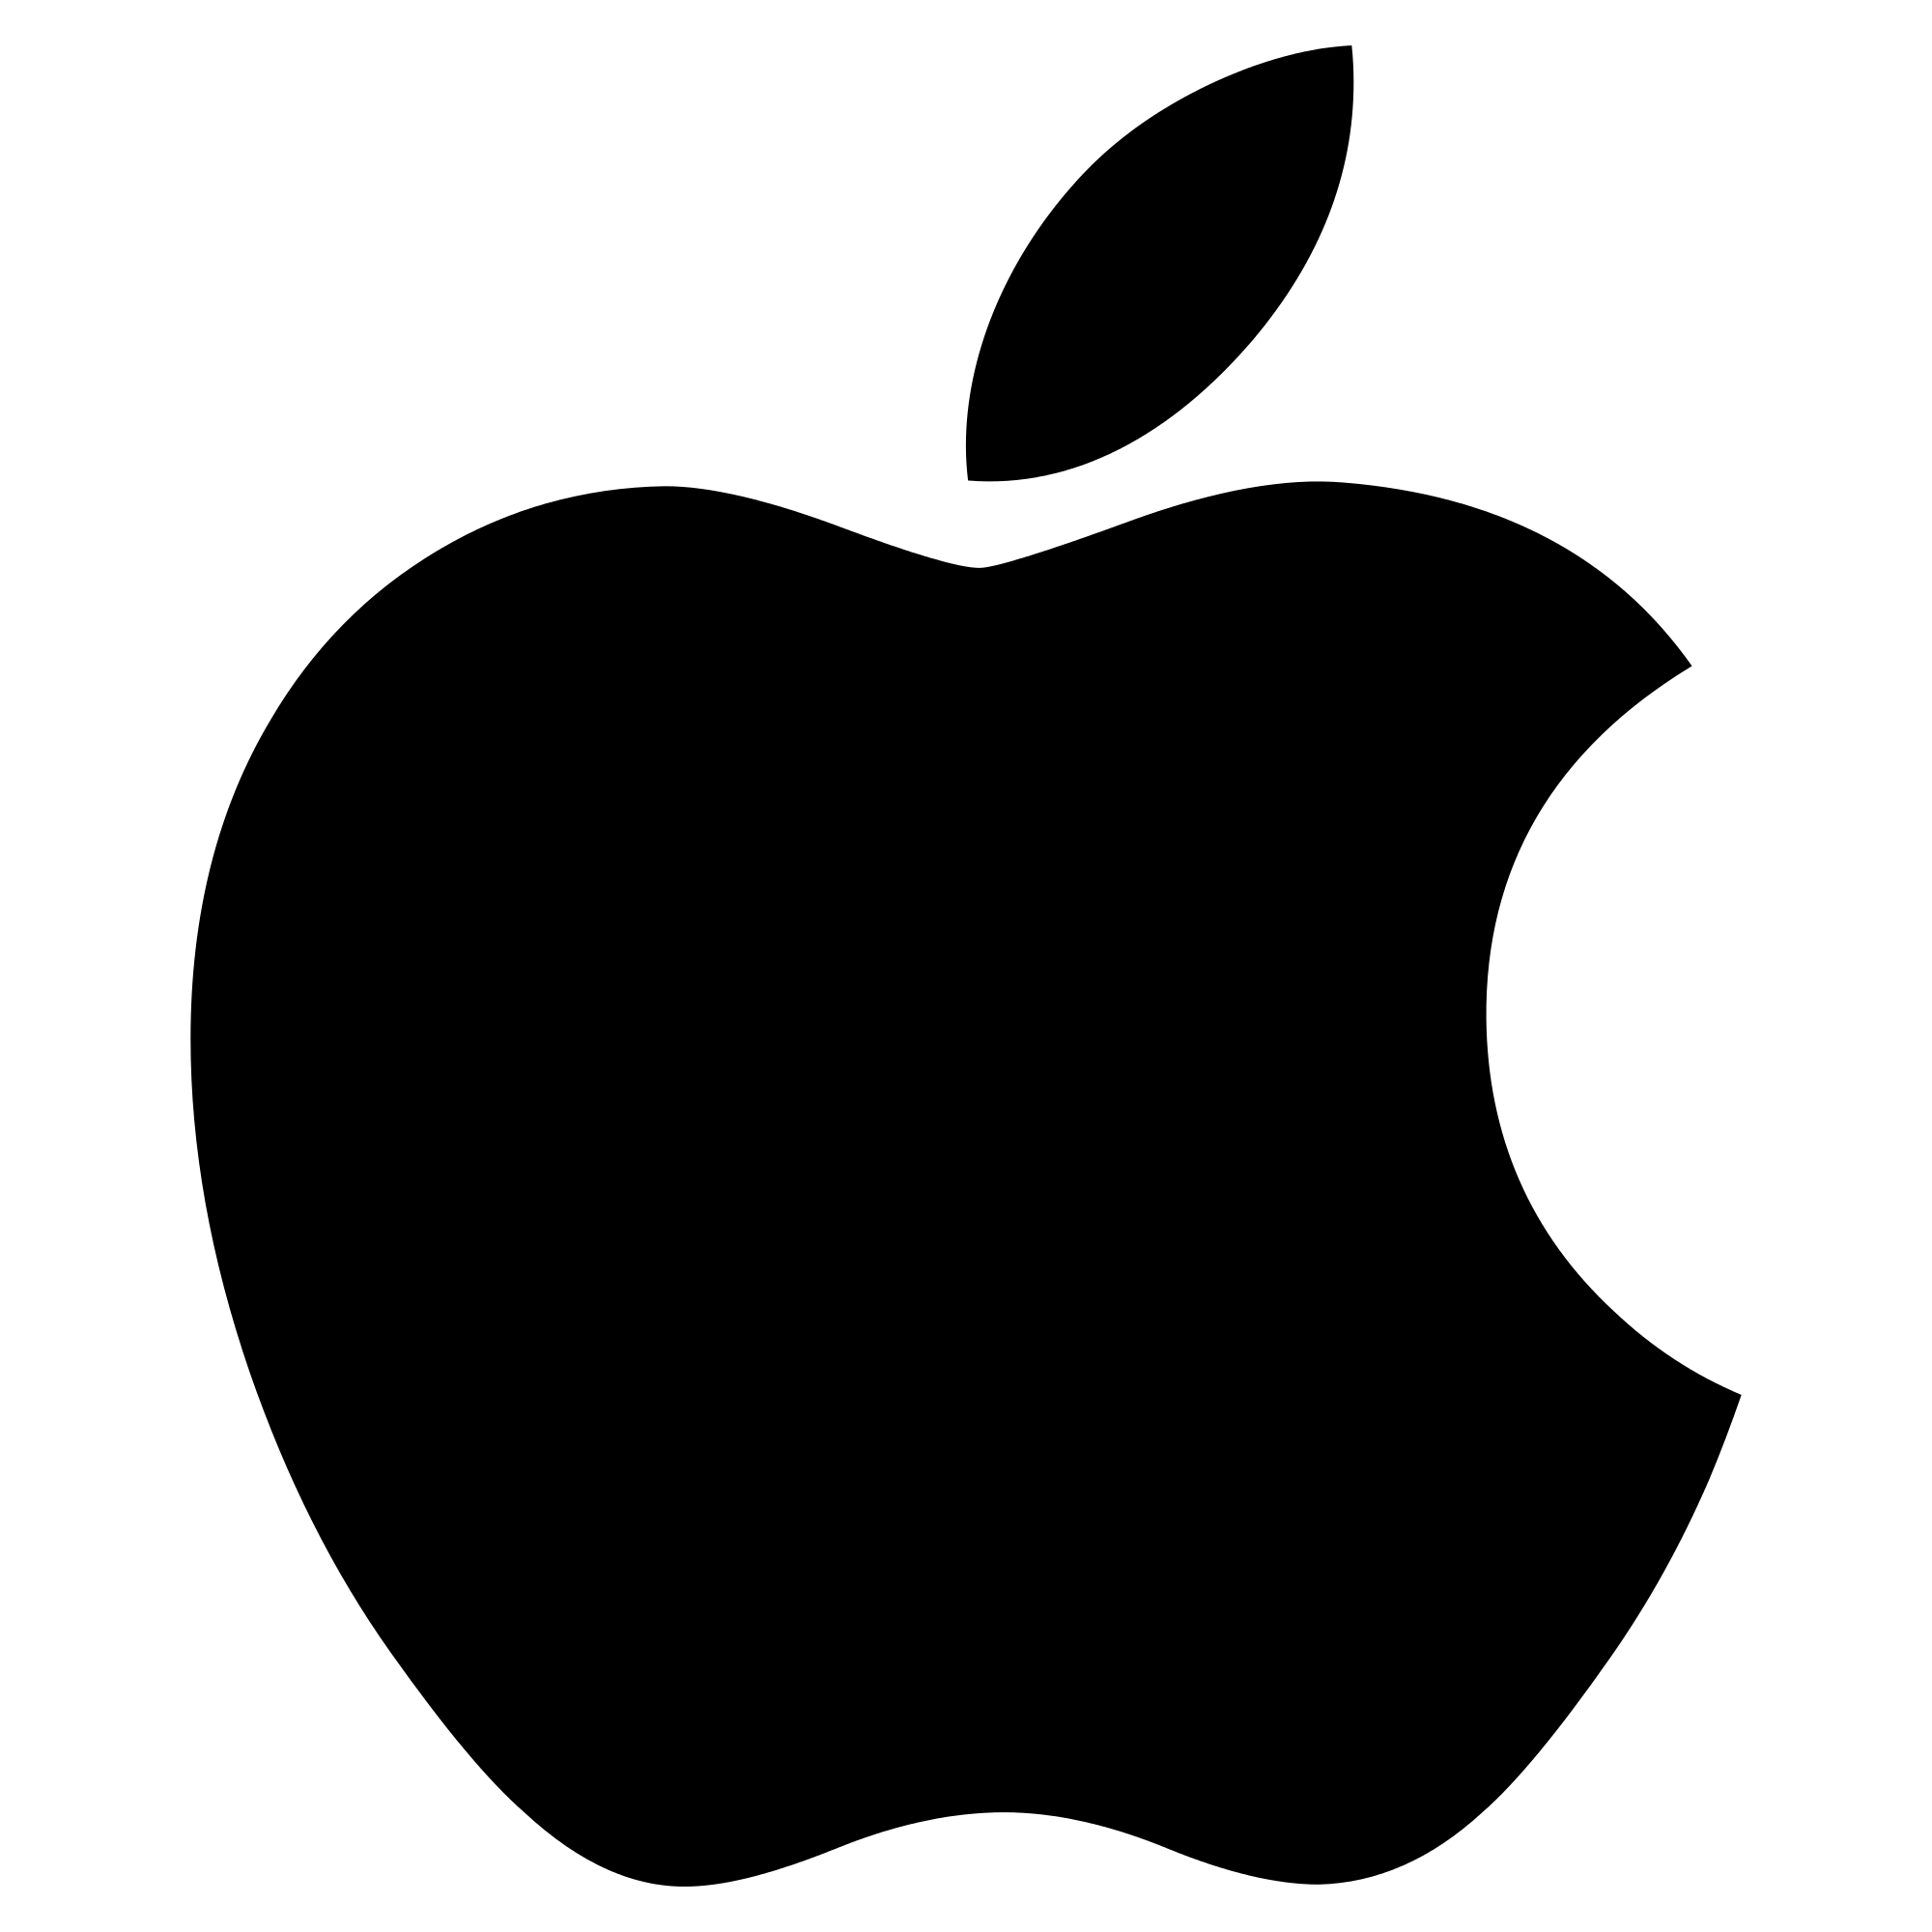 Apple Logo Black Silhouette